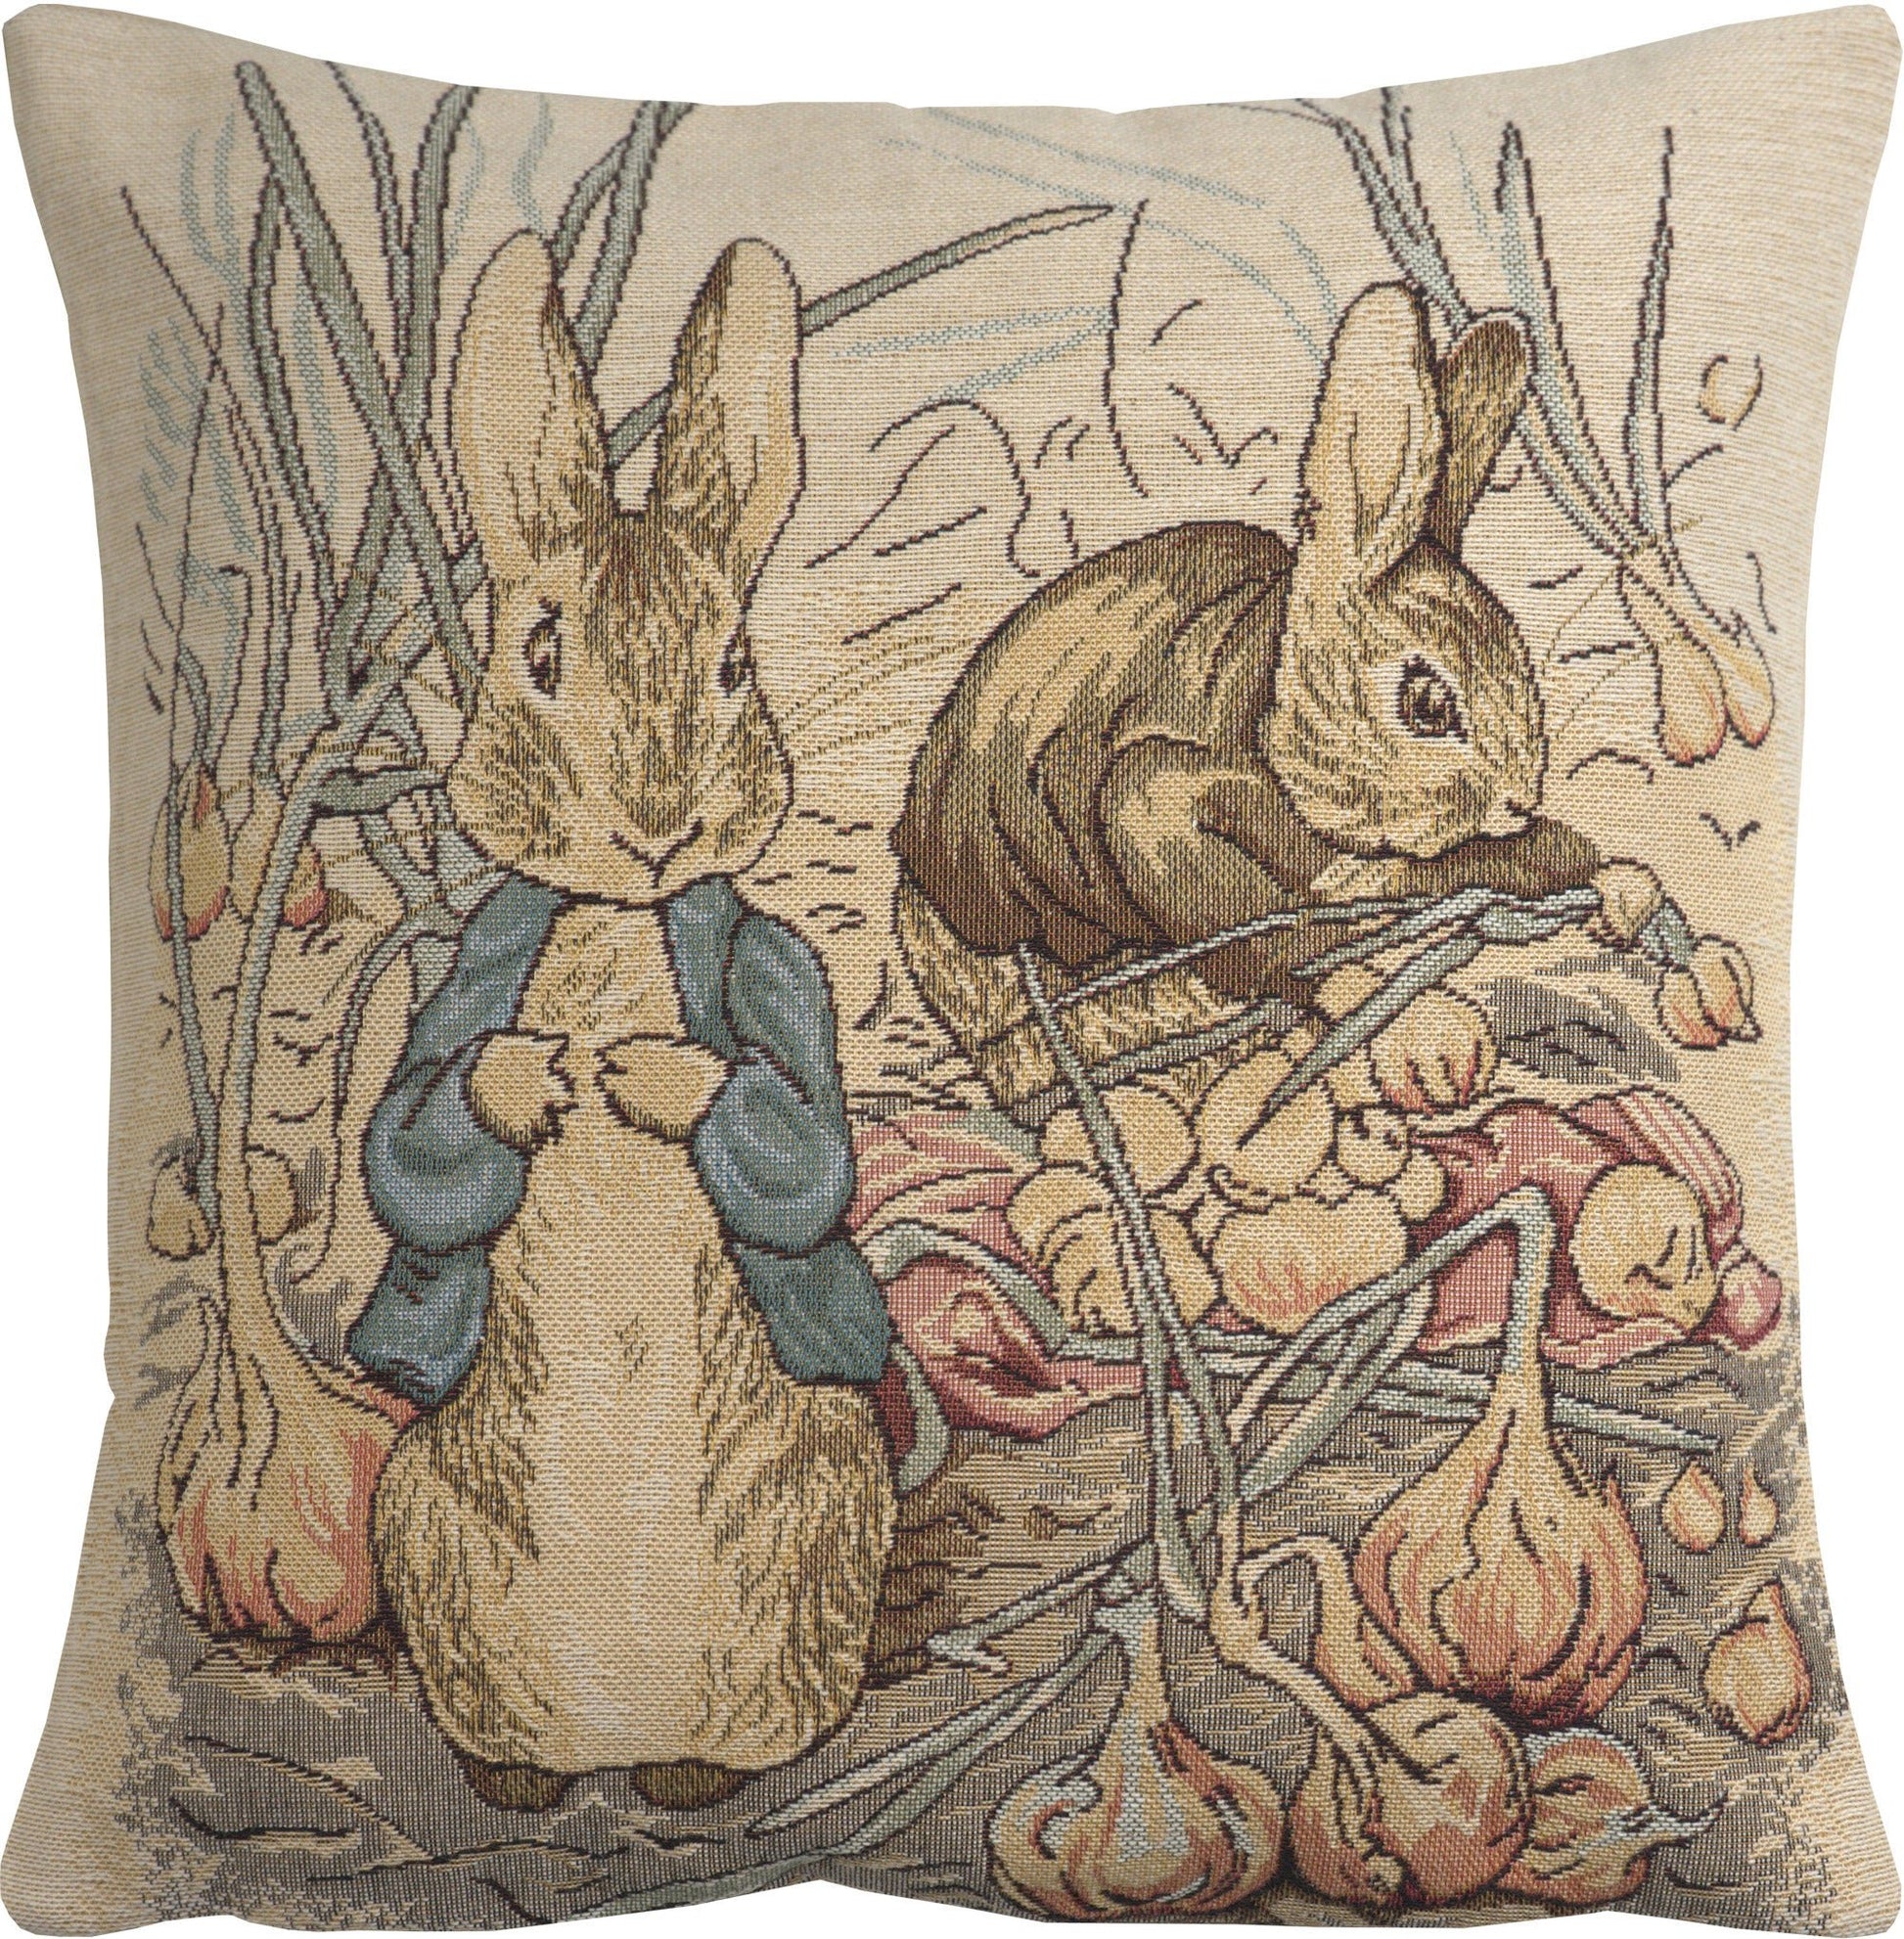 Benjamin Beatrix Potter European Tapestry Cushion Covers Home Decor Lining Zipper - RoseStraya.com